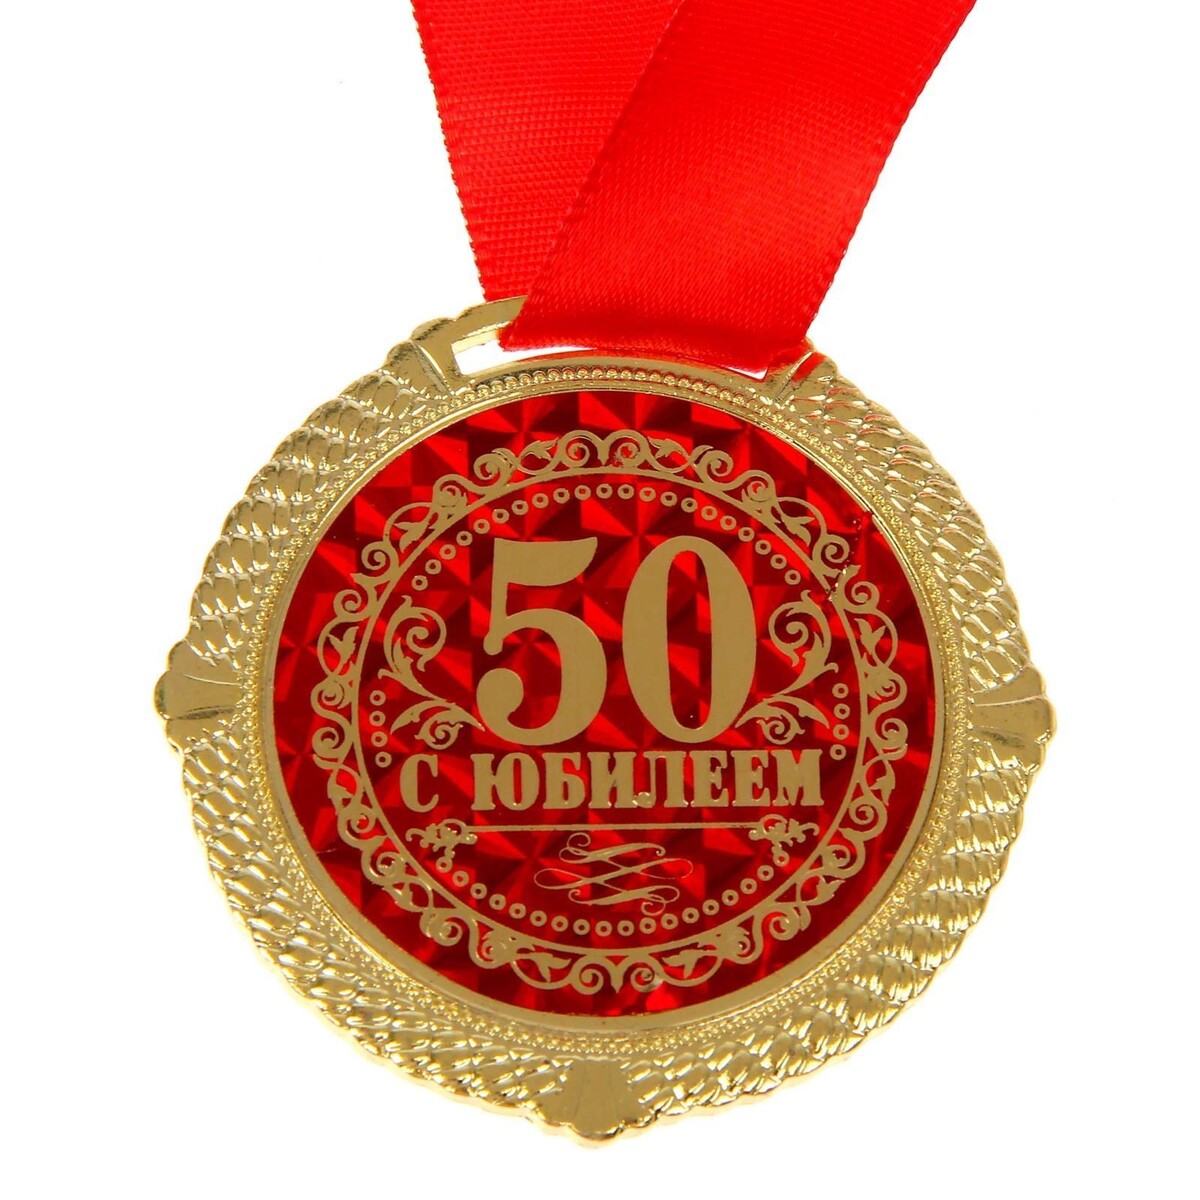 Юбилеи пятьдесят лет. Медаль 50 лет. Медаль с юбилеем. Медаль юбиляру 50 лет. Медаль 50 лет юбилей мужчине.